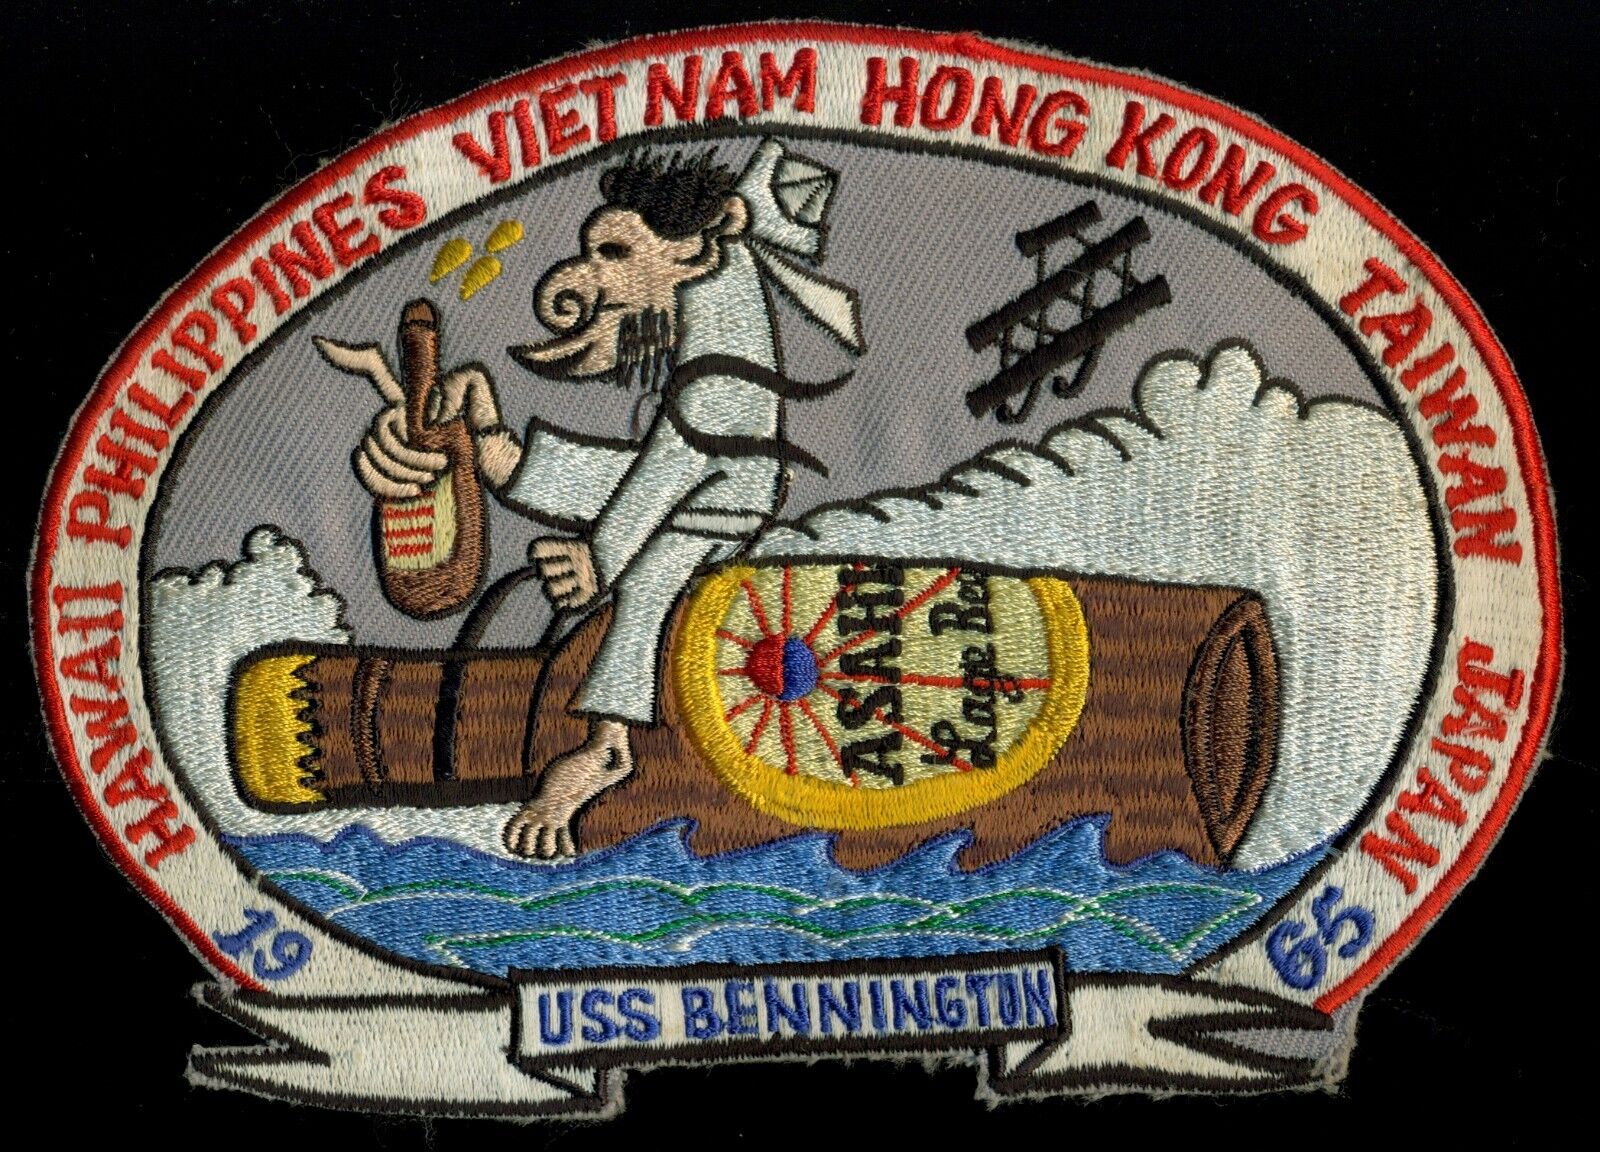 USN USS Bennington CVA 20 CVS 20 Vietnam Cruise 1965 Patch N-7